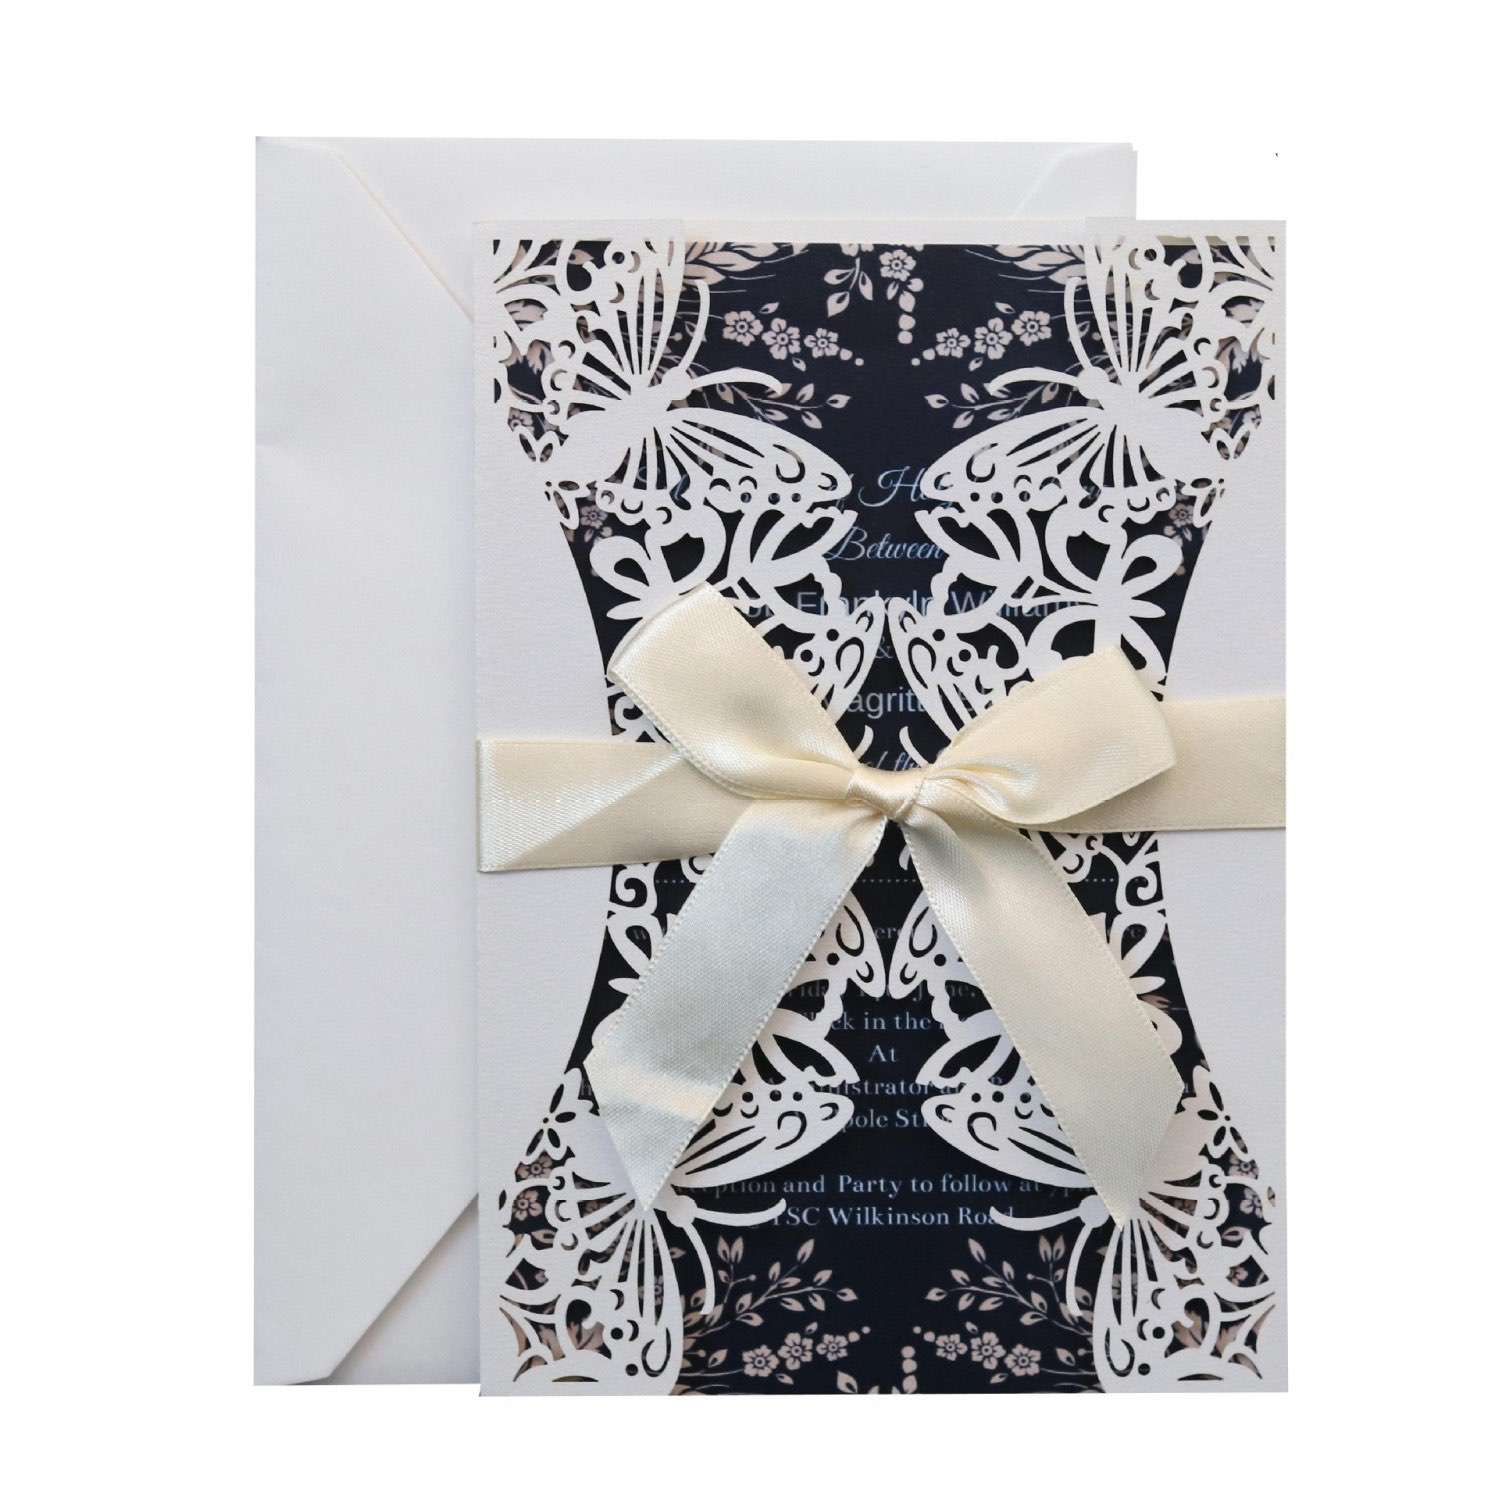 White Wedding Invitation Rectangle Butterfly Invitation Card Beautiful Card